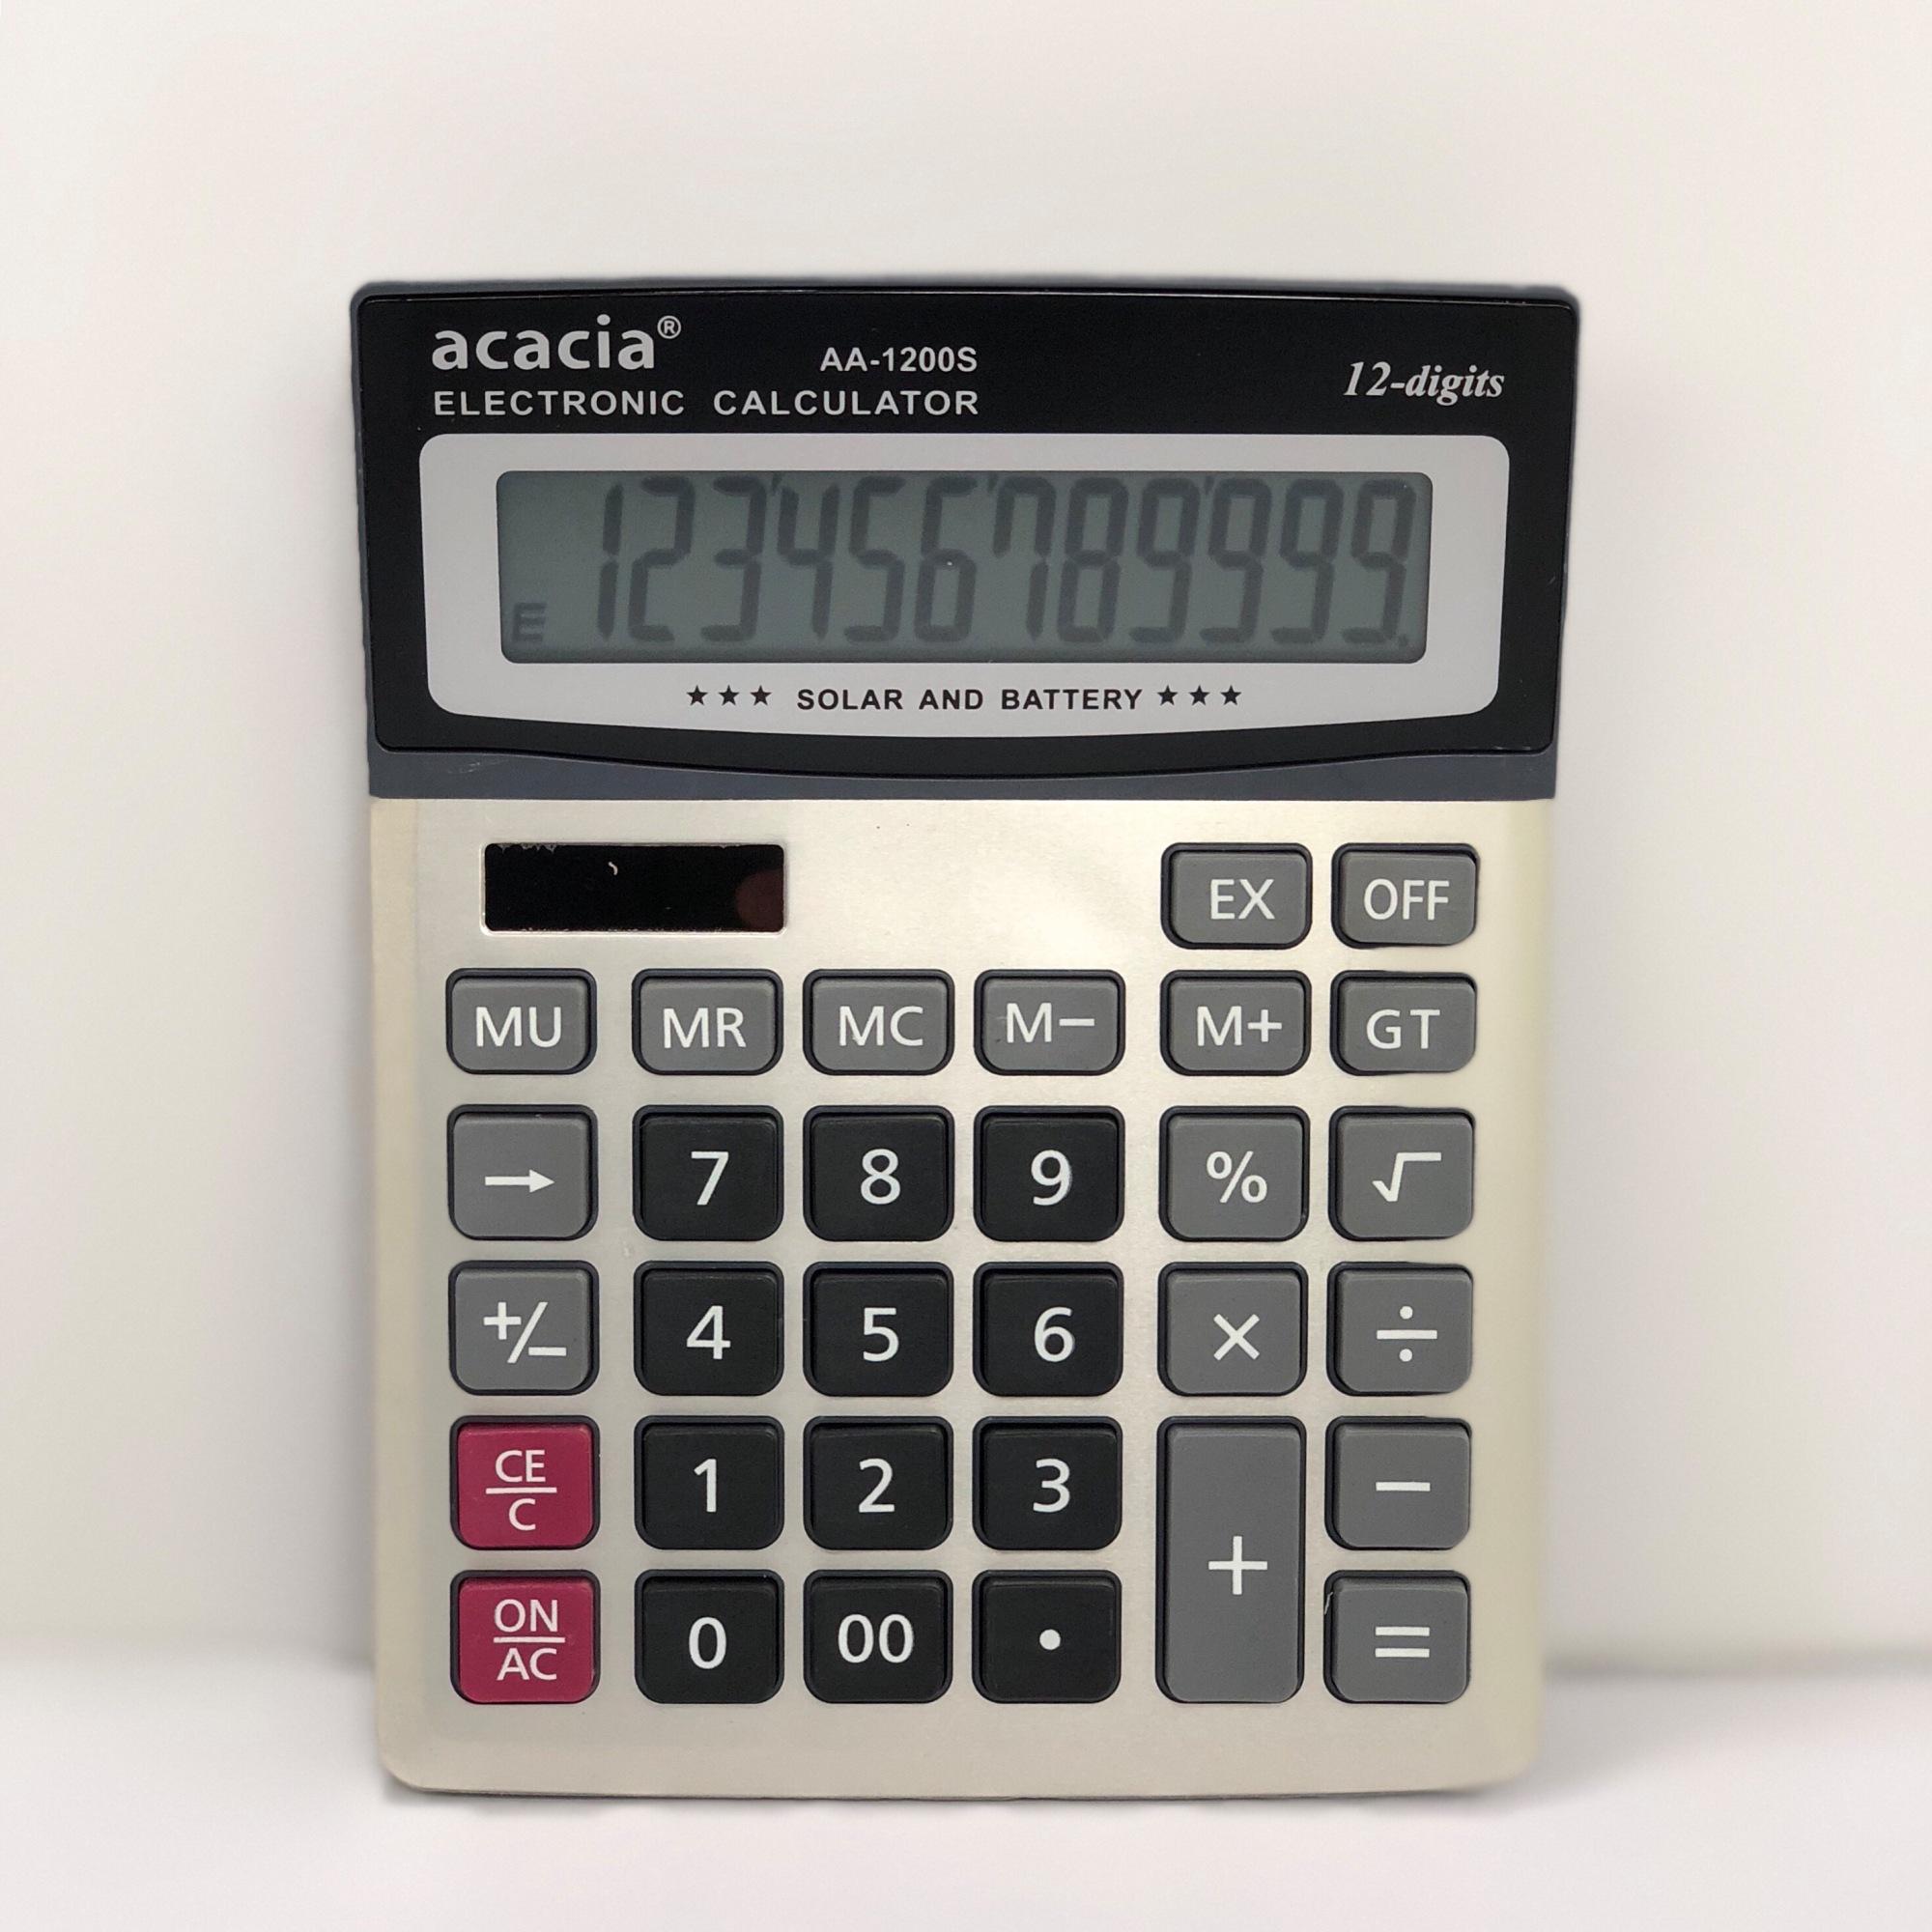 Дуин калькулятор. Electronic calculator FG-200. Калькулятор Electronic calculator. DL-1674 калькулятор. Nissan 20-Digit Pin calculator.